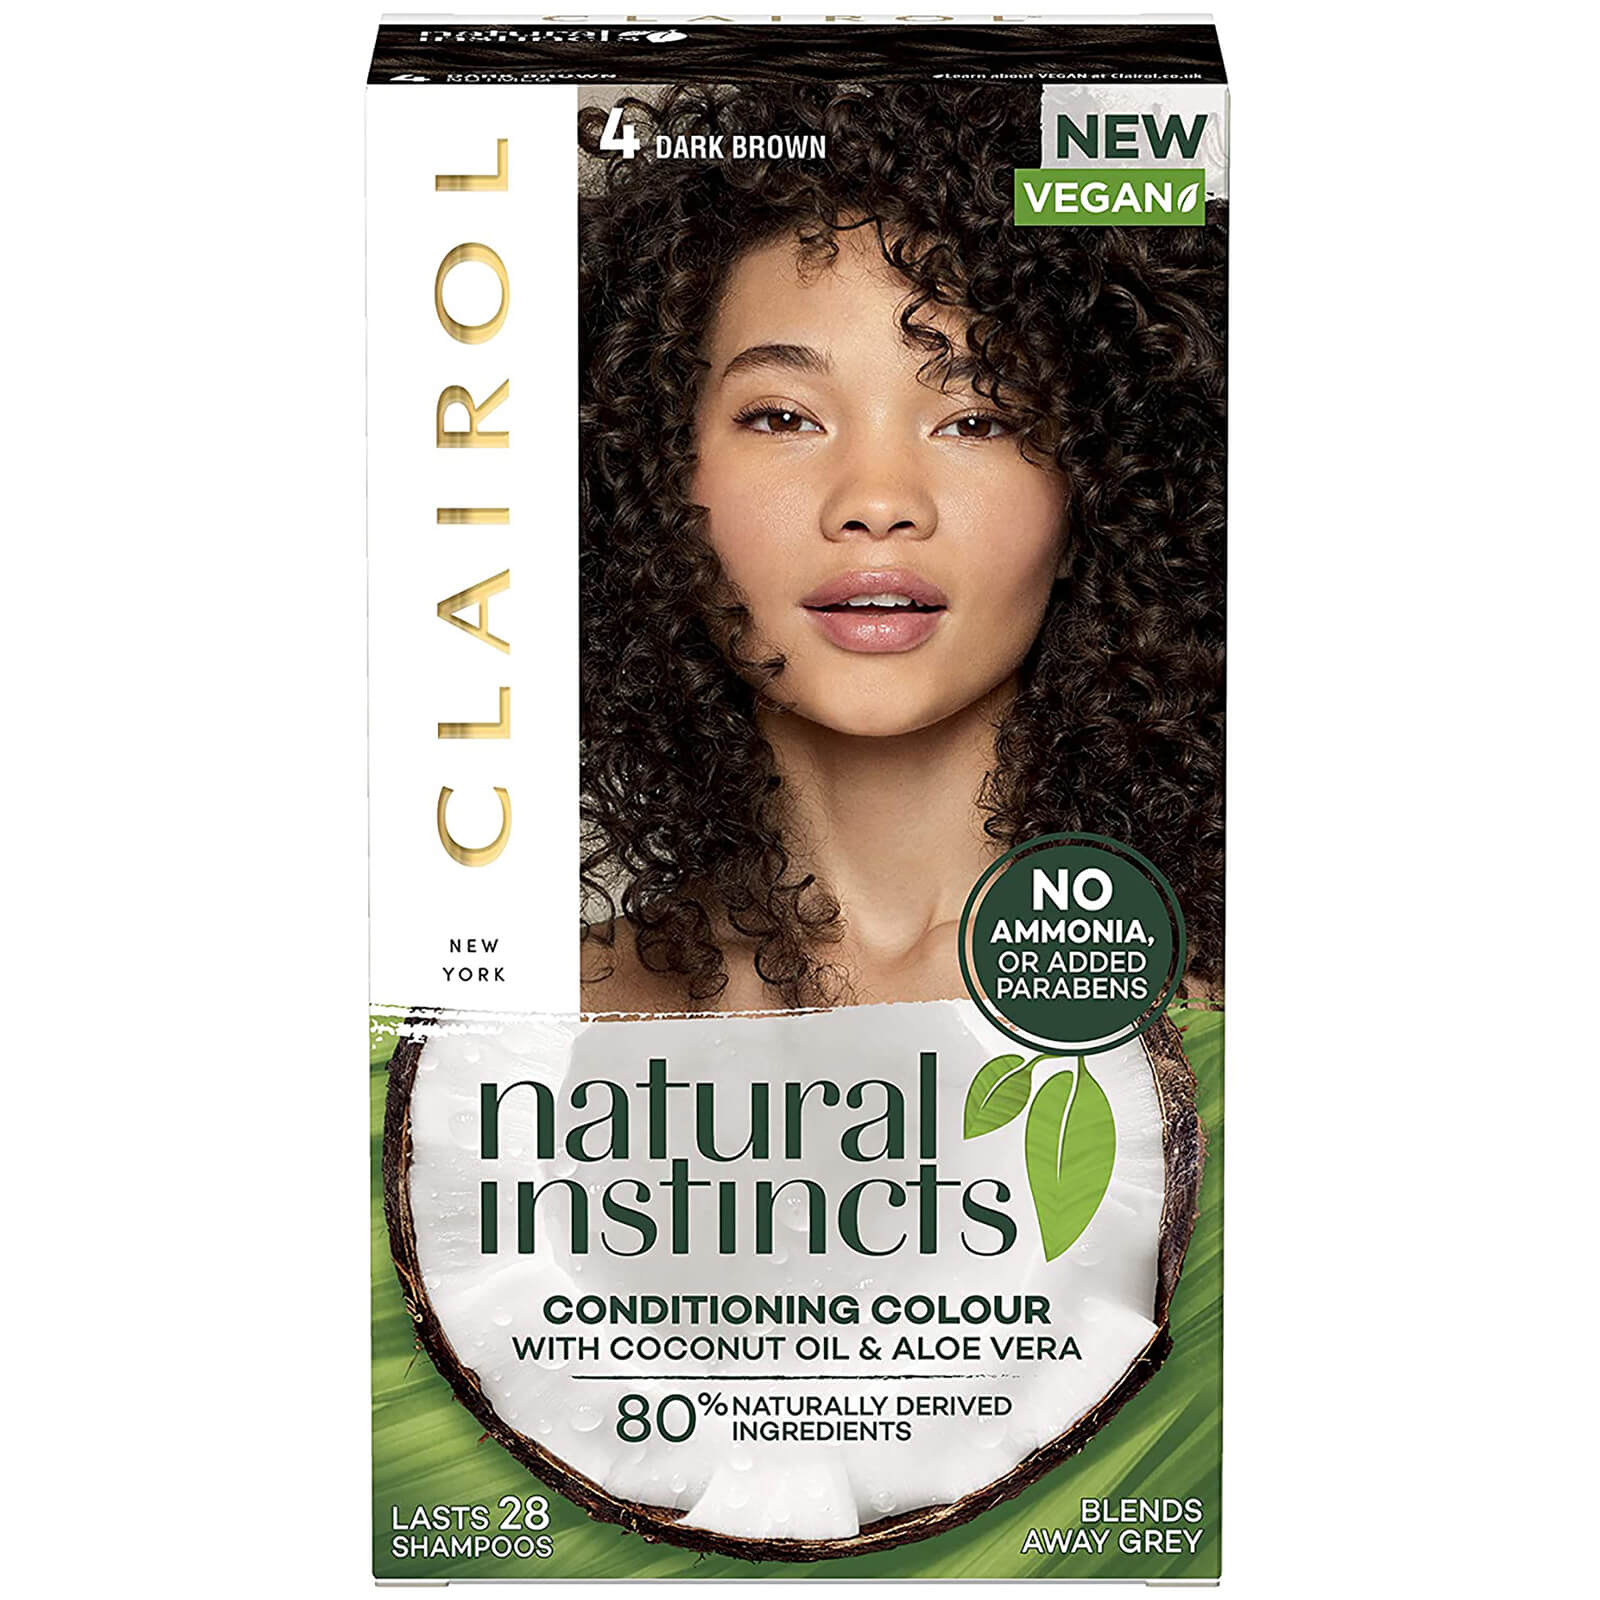 Clairol Natural Instincts Semi-Permanent No Ammonia Vegan Hair Dye 177ml (Various Shades) - 4RV Dark Burgandy